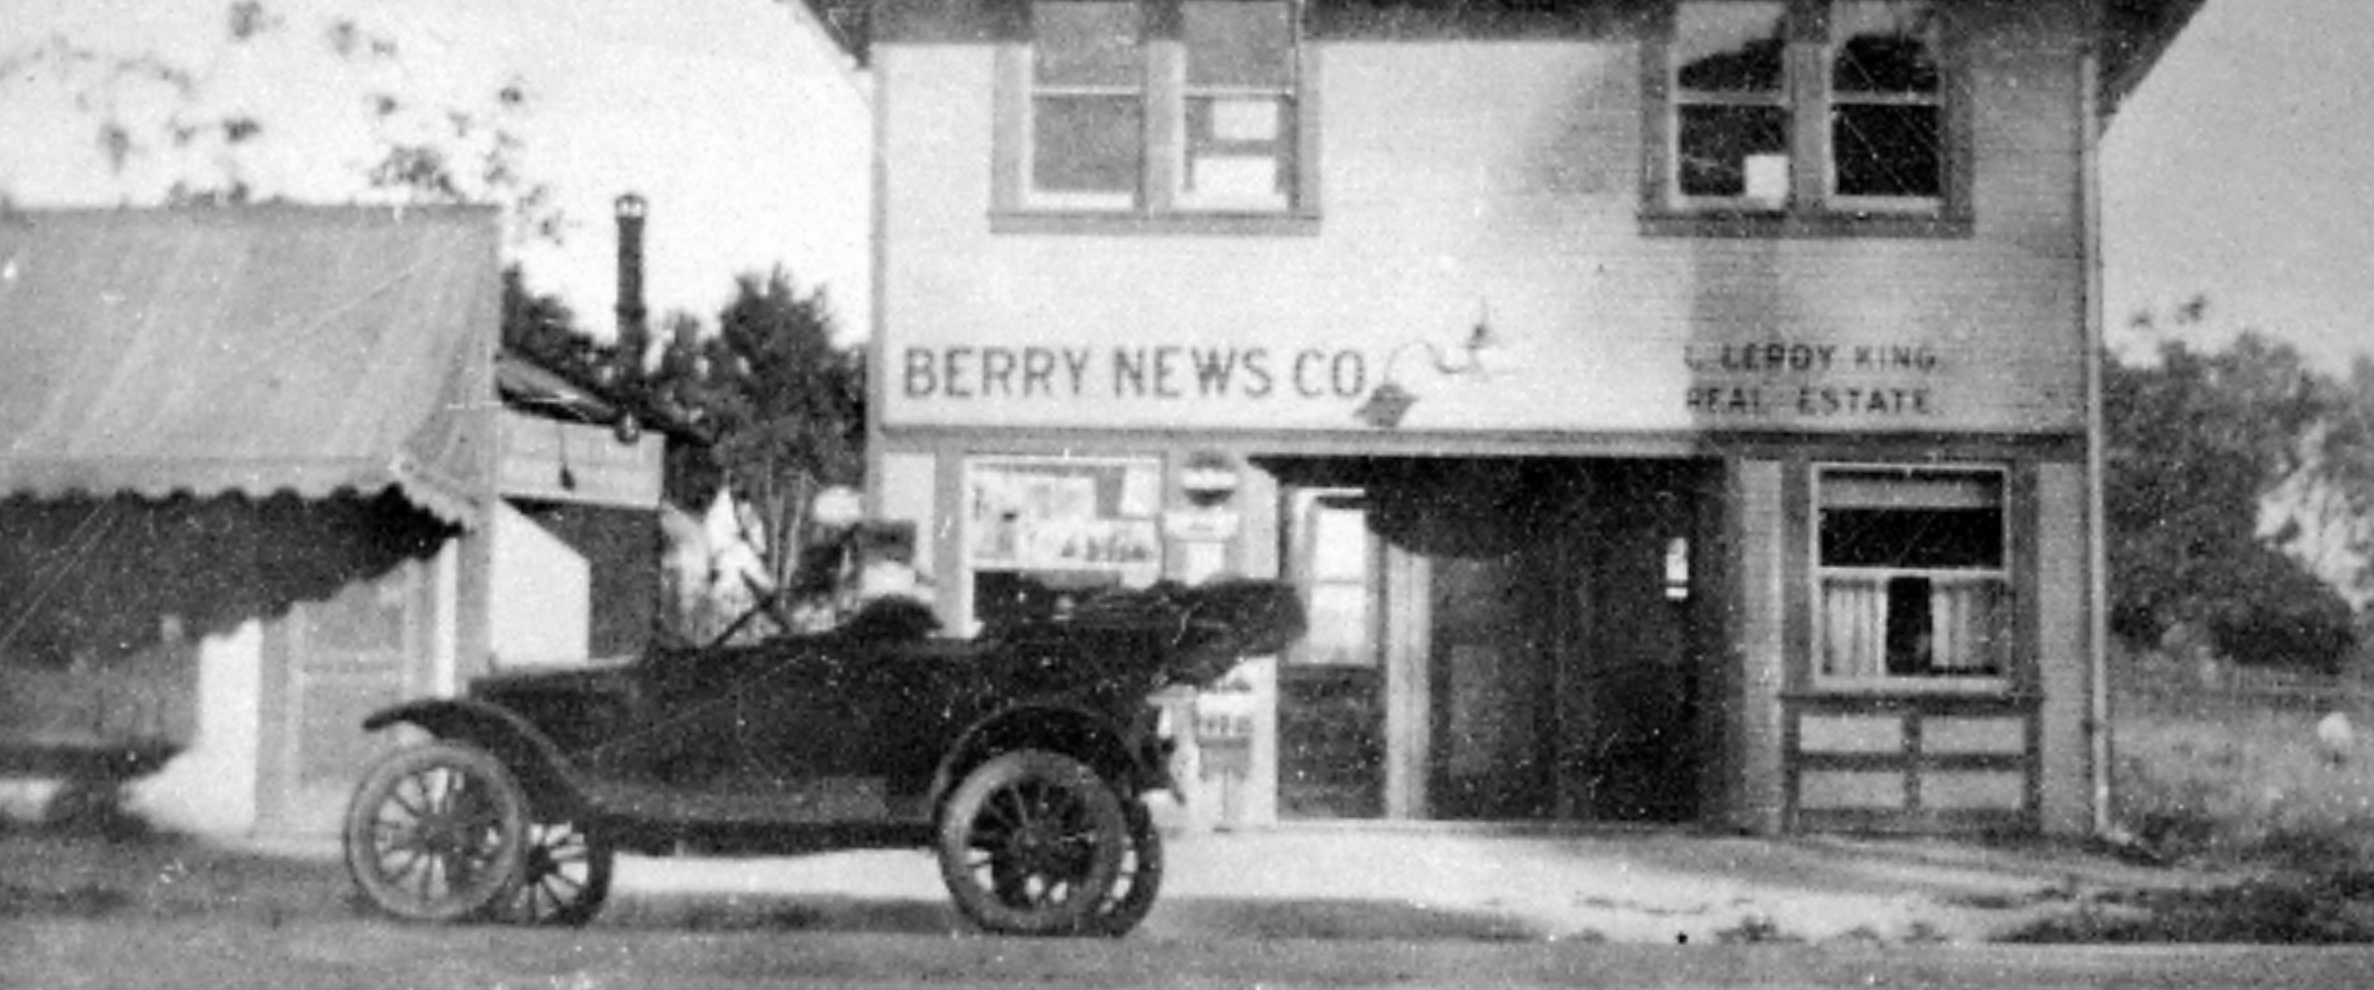 Berry News Company BANNER.jpg